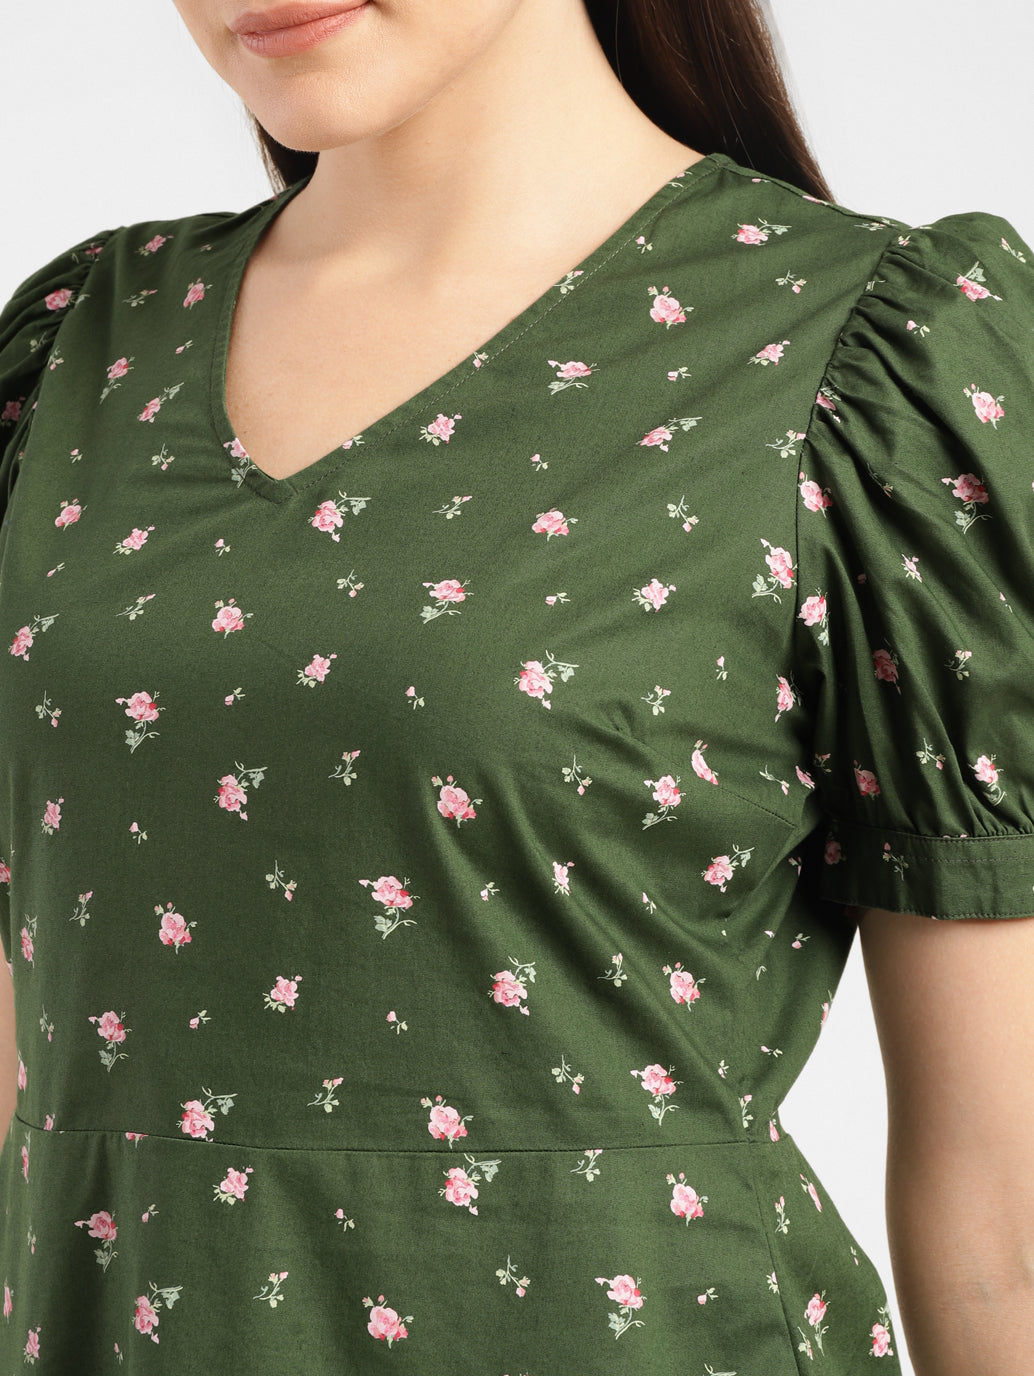 Women's Floral Print Green V Neck Top